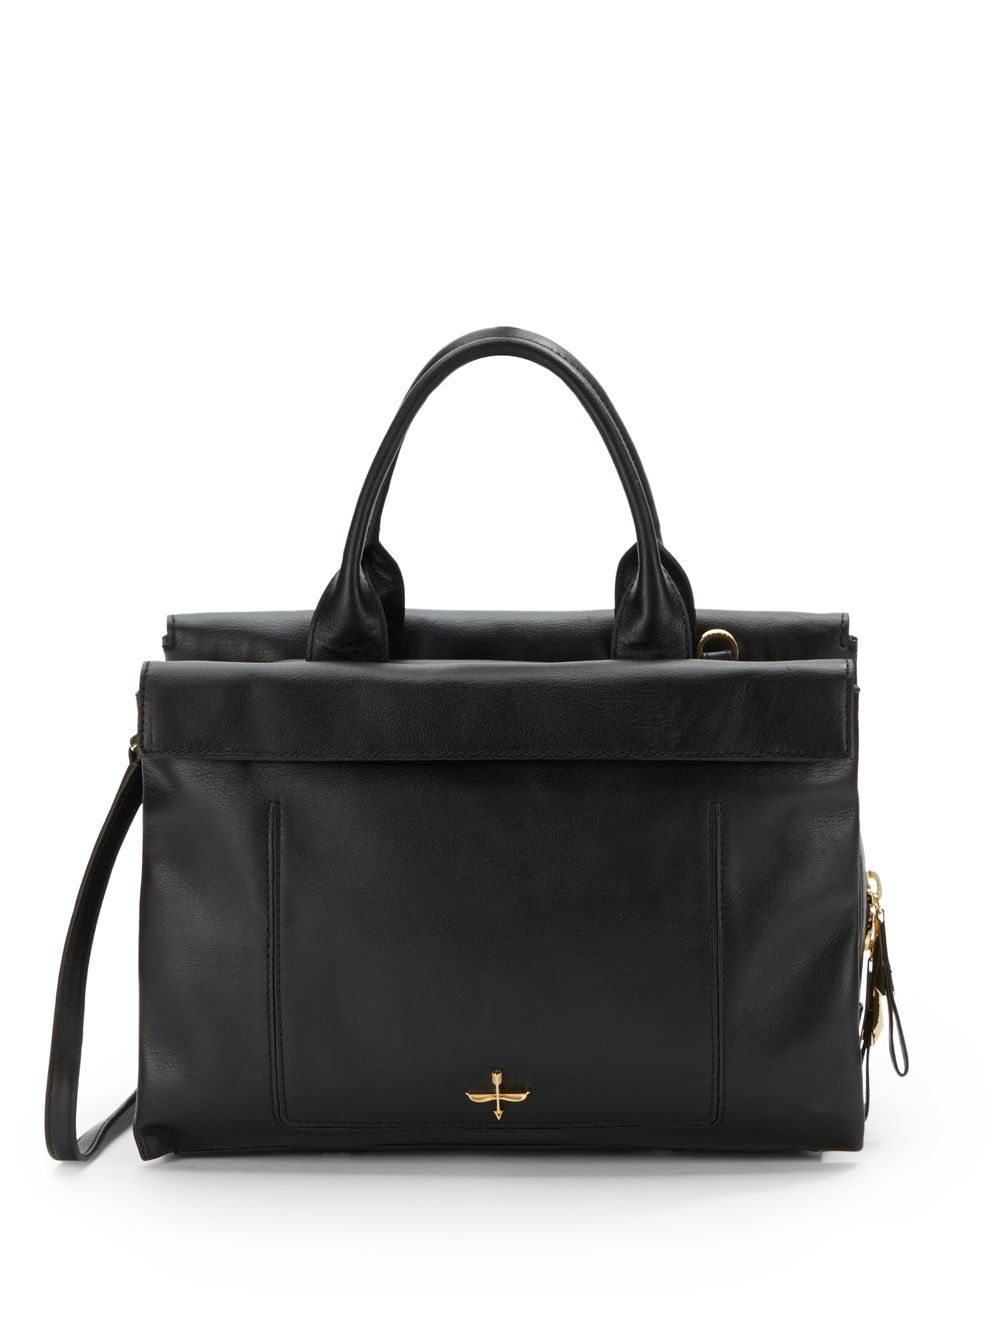 Pour La Victoire Adelle Leather Shoulder Bag in Black | Lyst